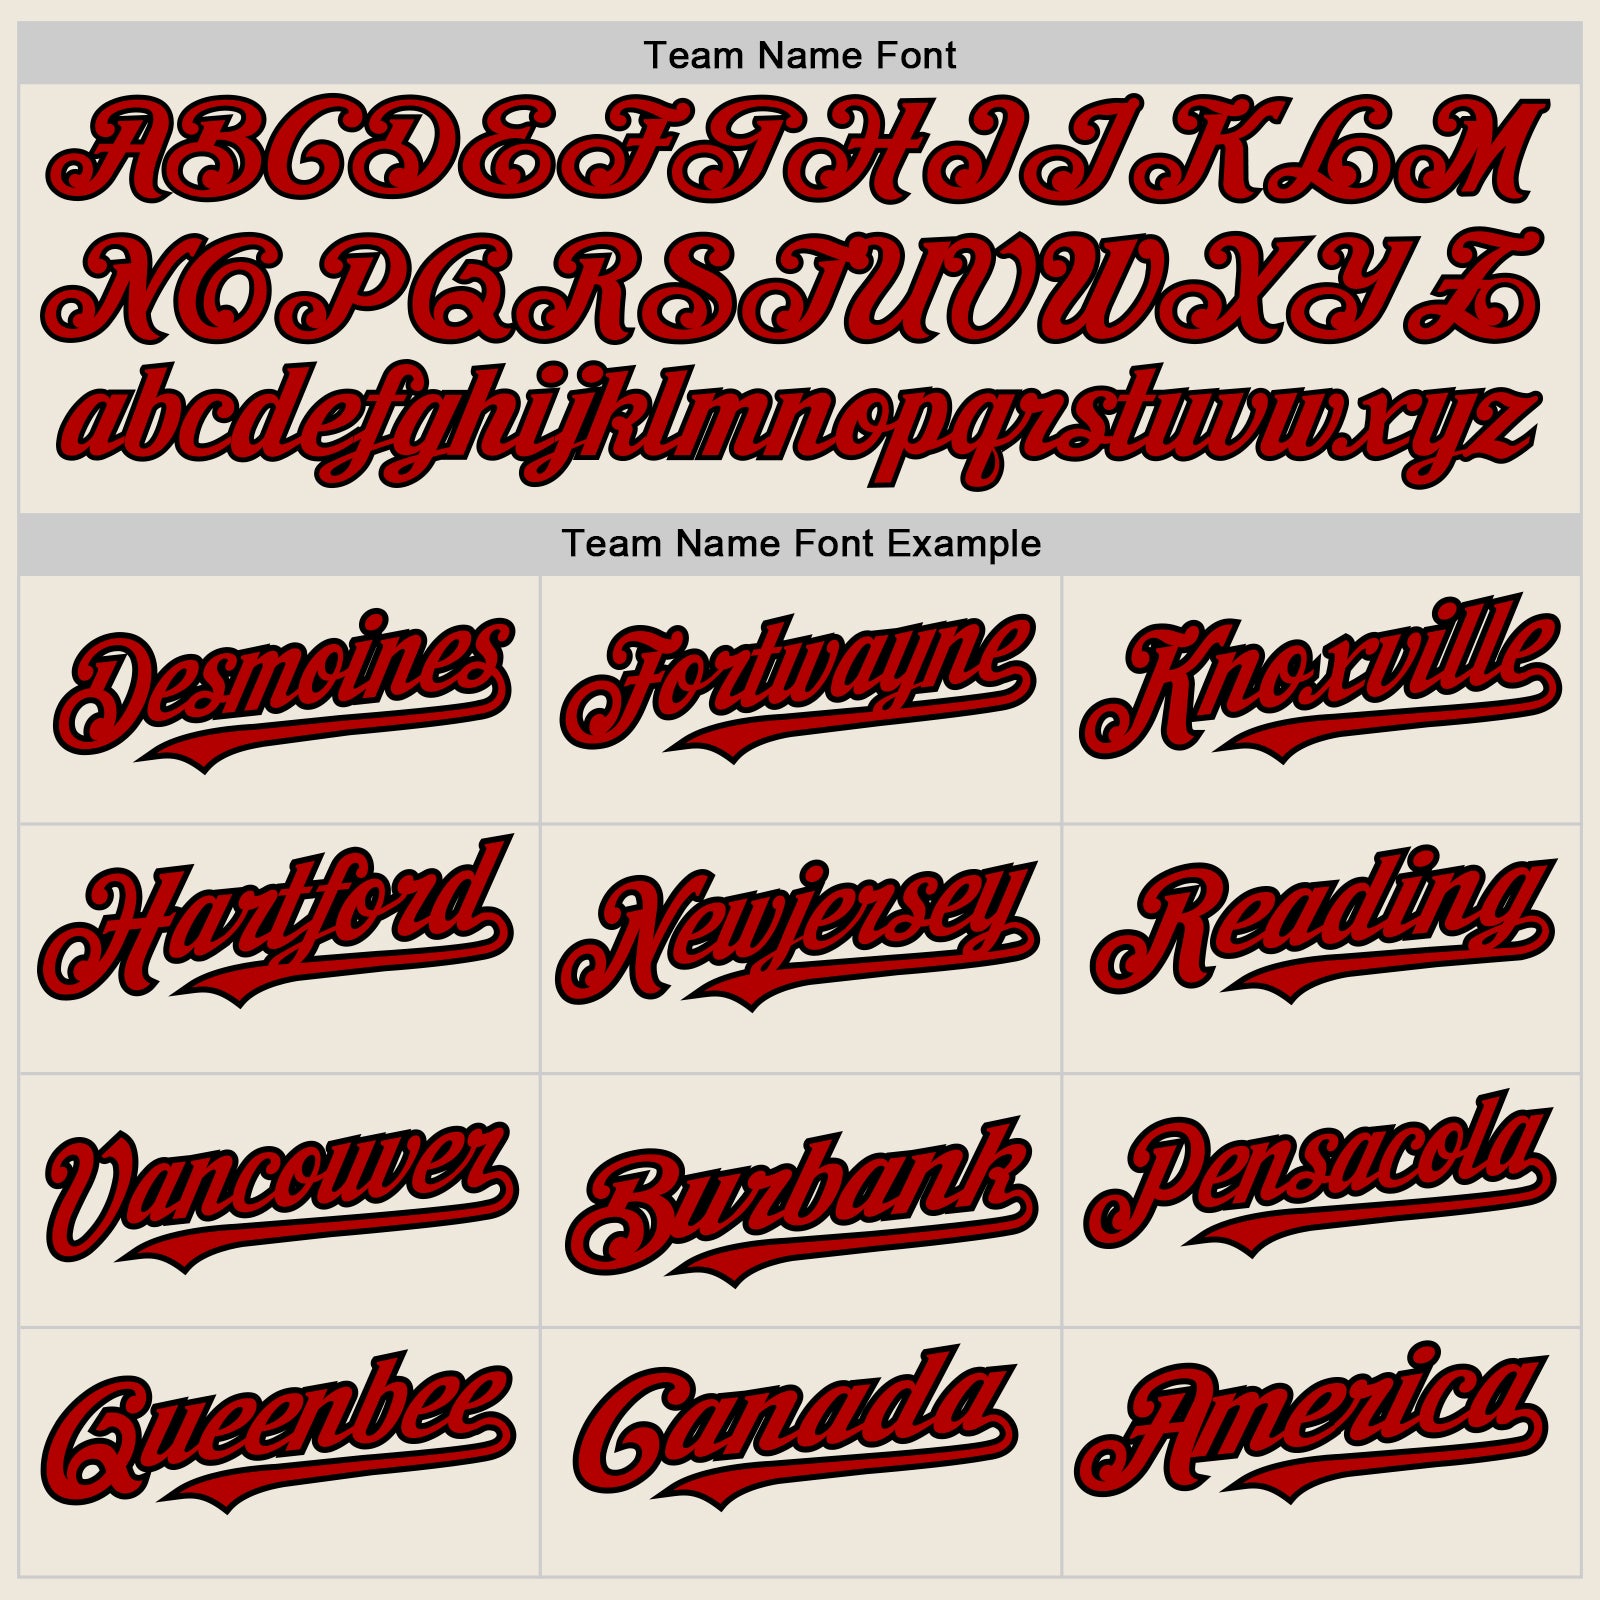 Custom Cream Red-Black Authentic Raglan Sleeves Baseball Jersey Discount